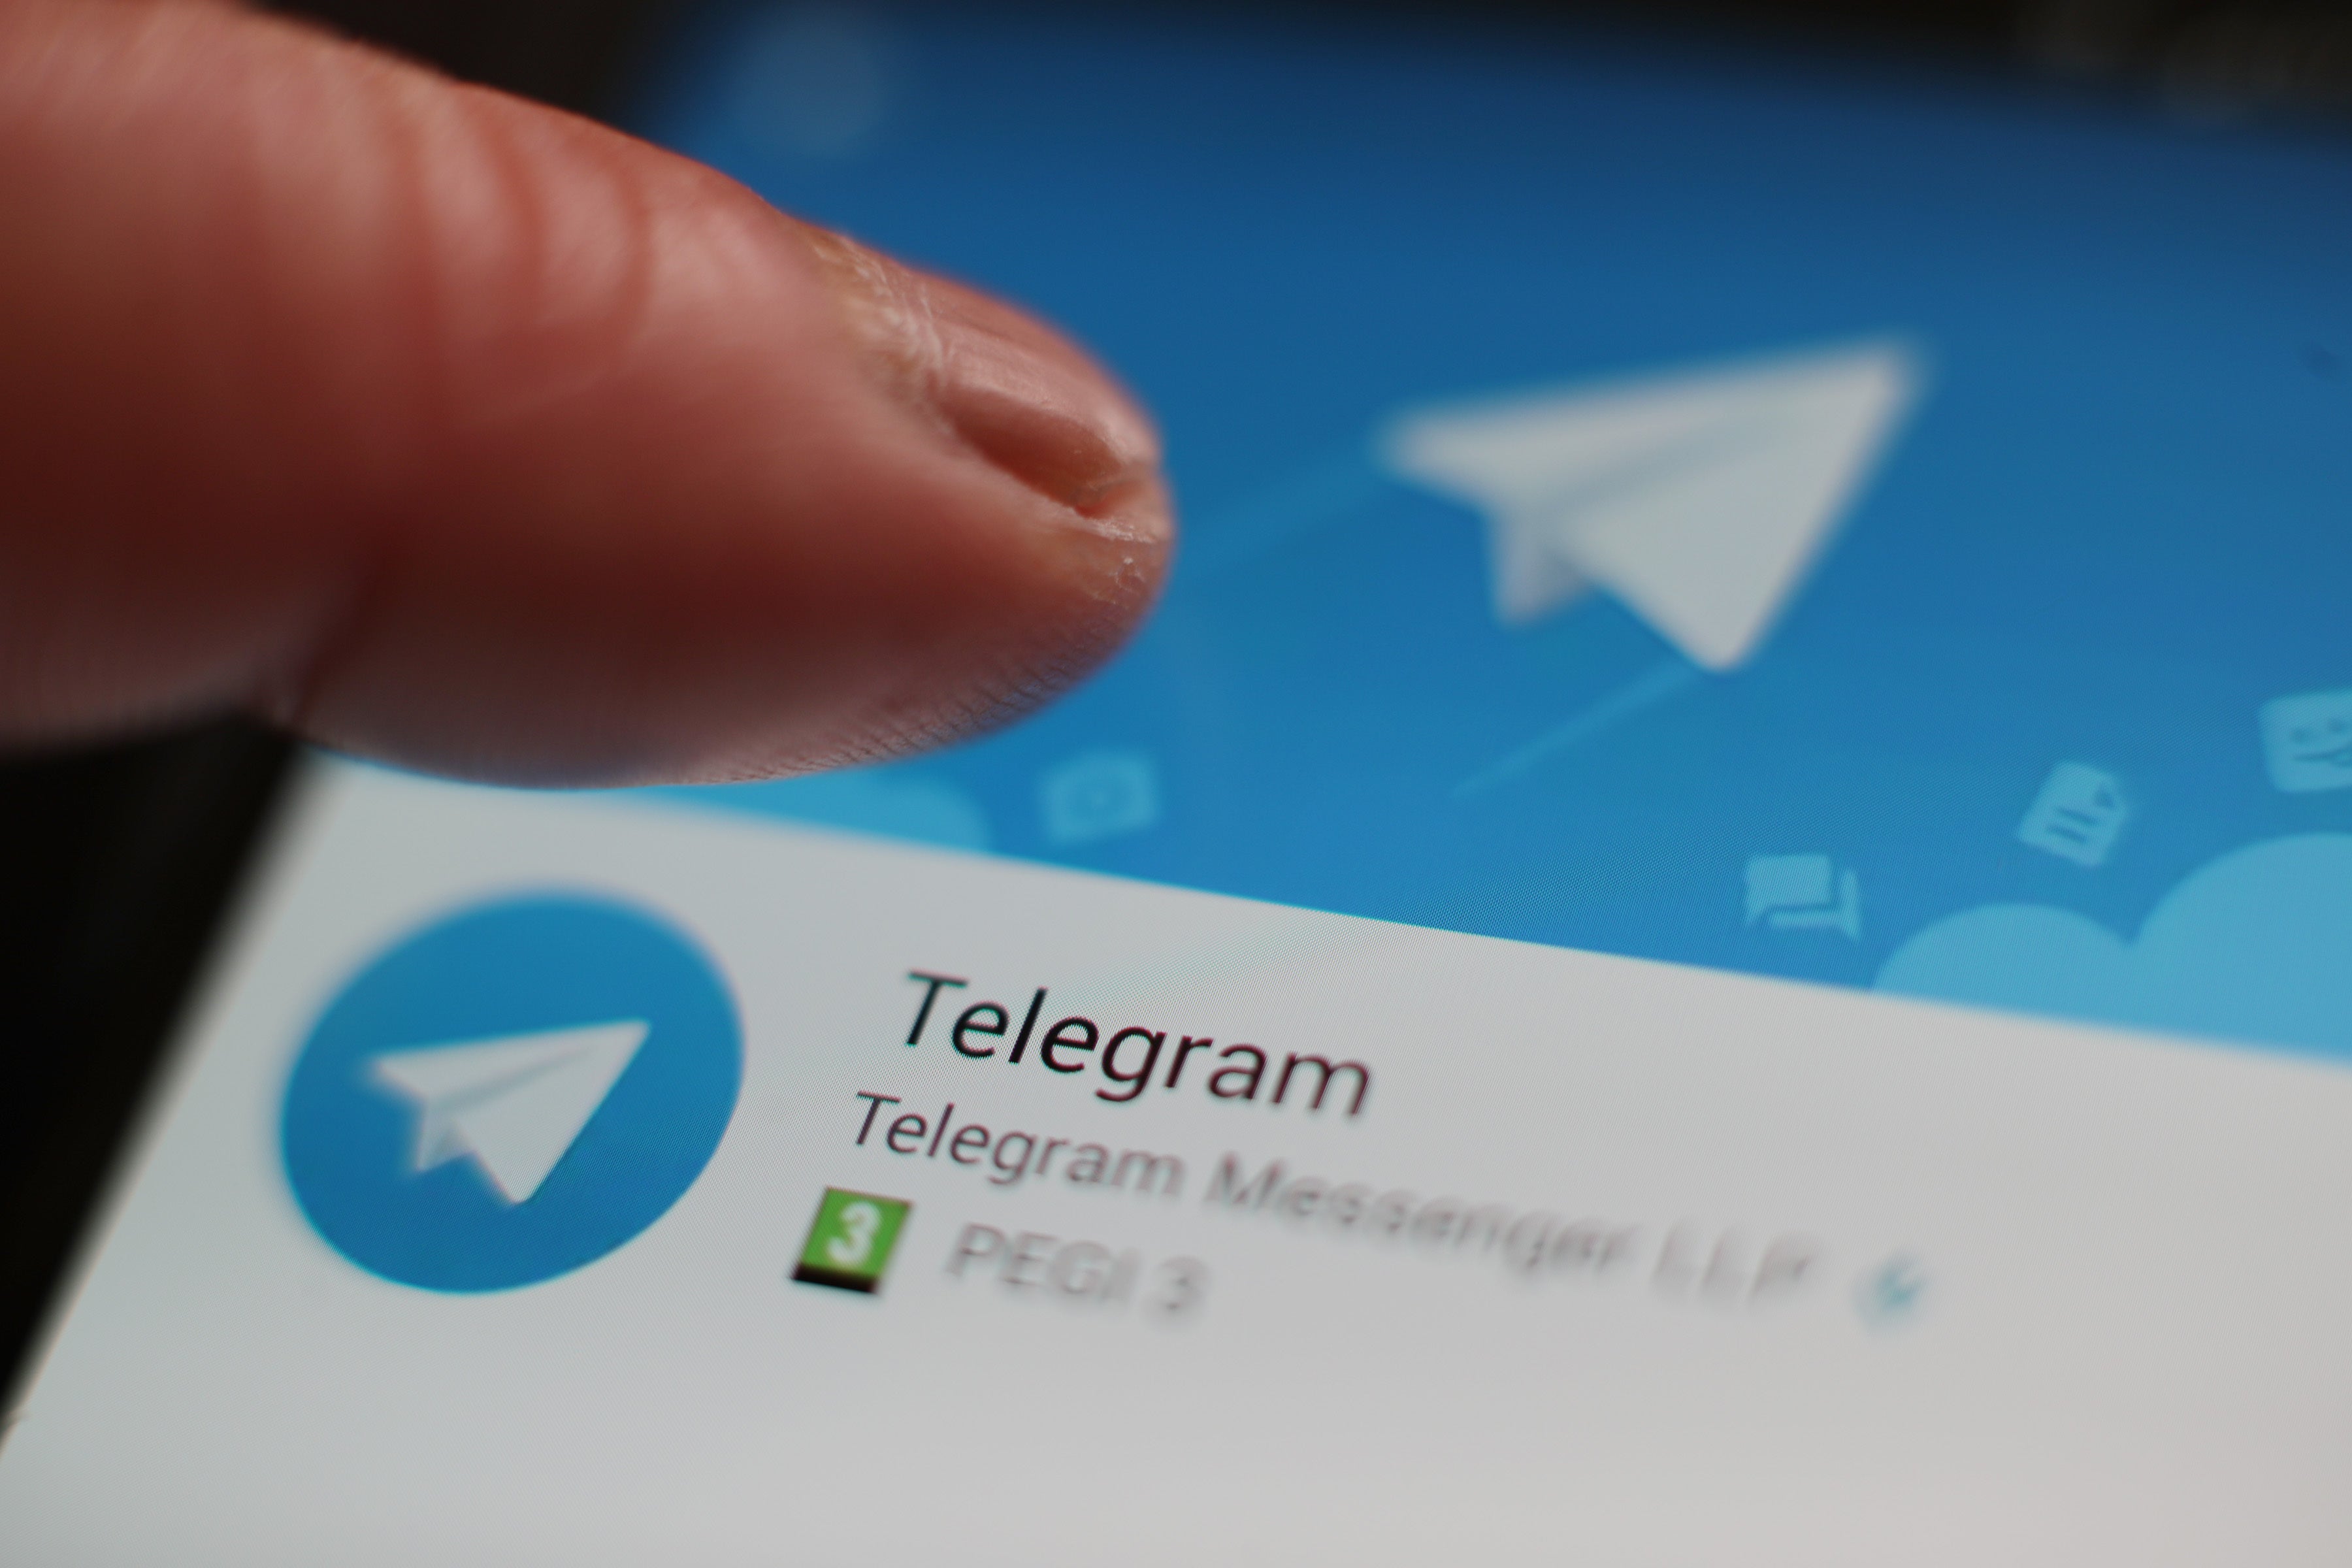 Отправитель телеграм. Телеграм. Телеграм в телефоне. Фото для телеграмма. Мессенджер телеграм.